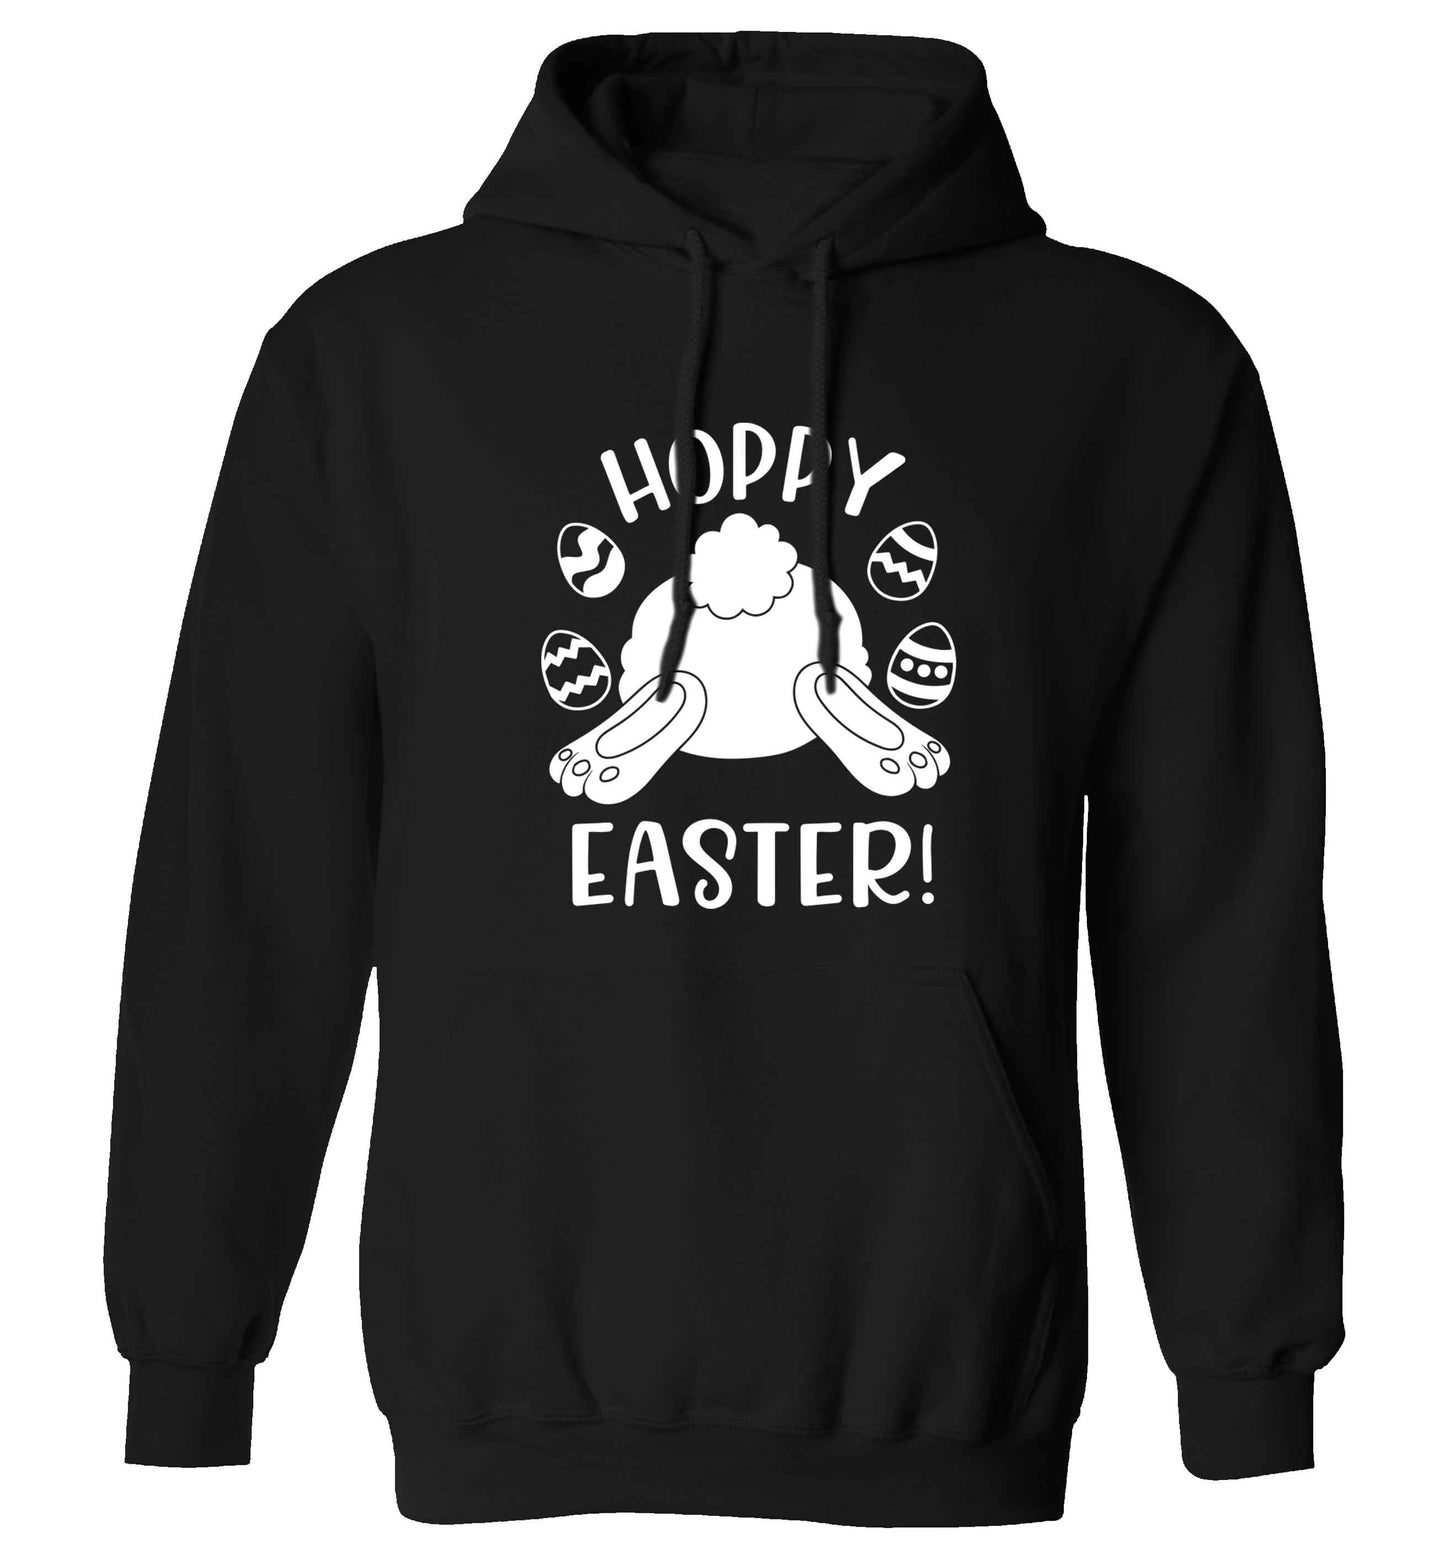 Hoppy Easter adults unisex black hoodie 2XL